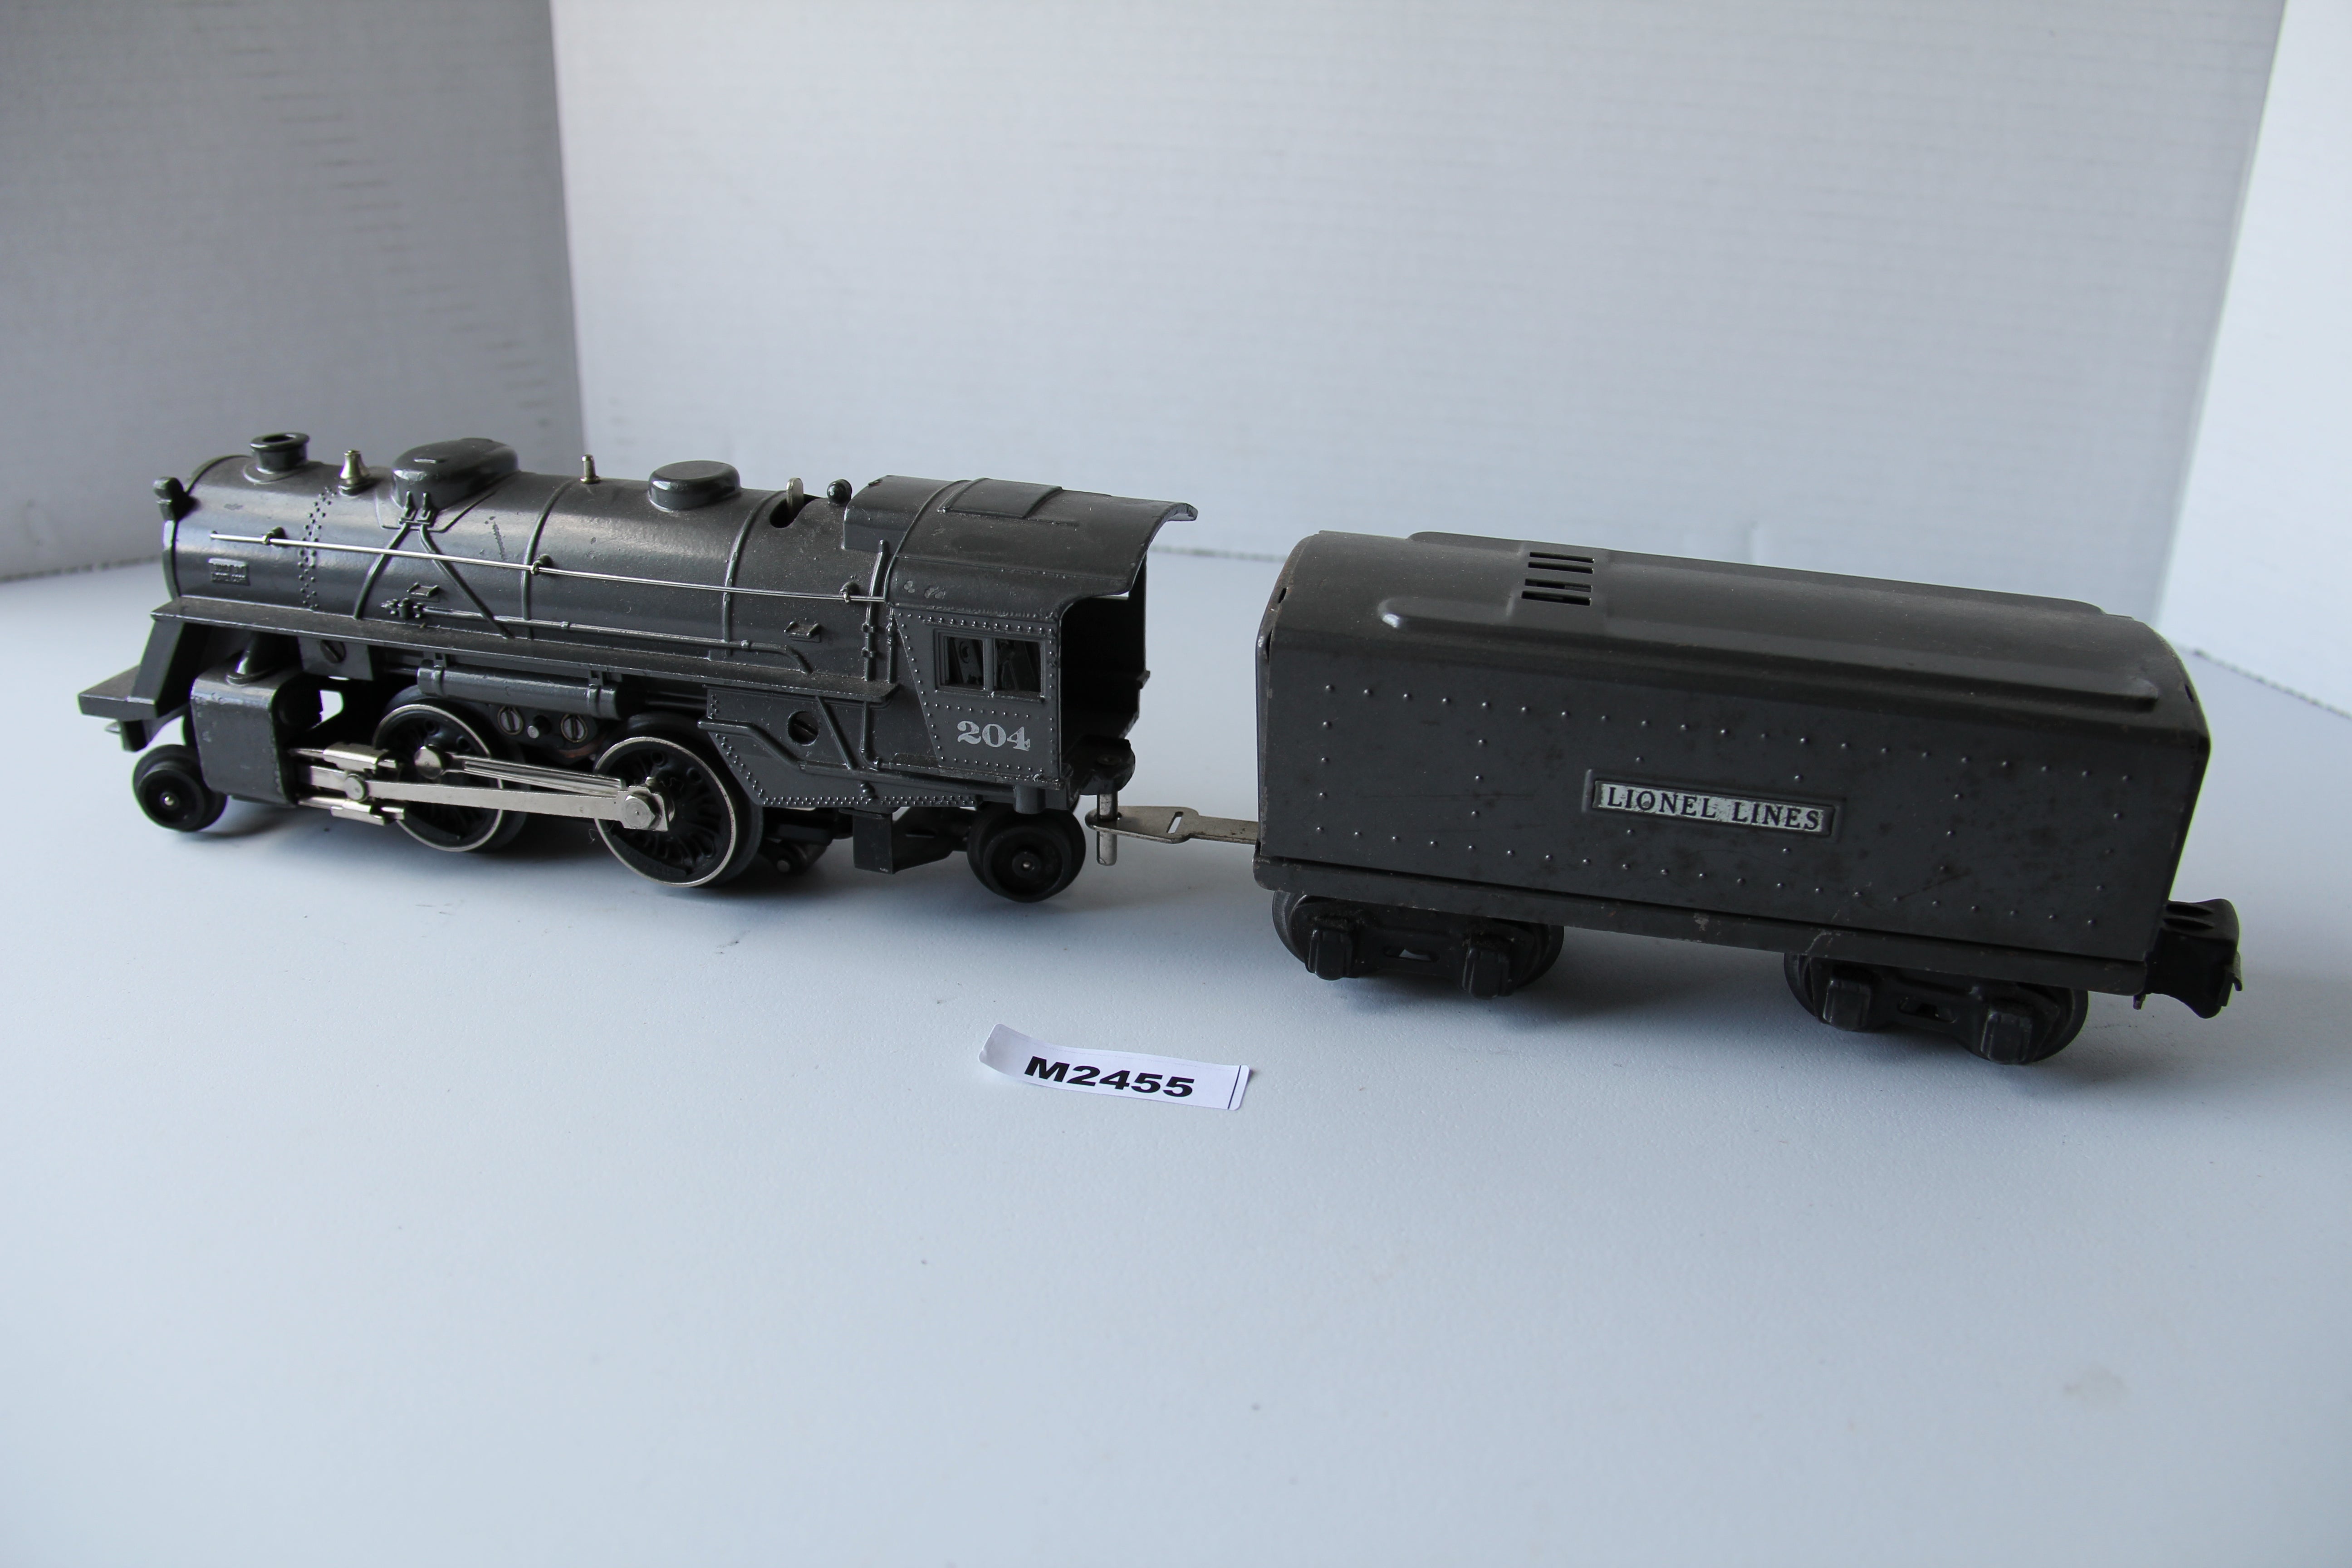 Lionel Lines #204 Engine & Tender-Second hand-M2455